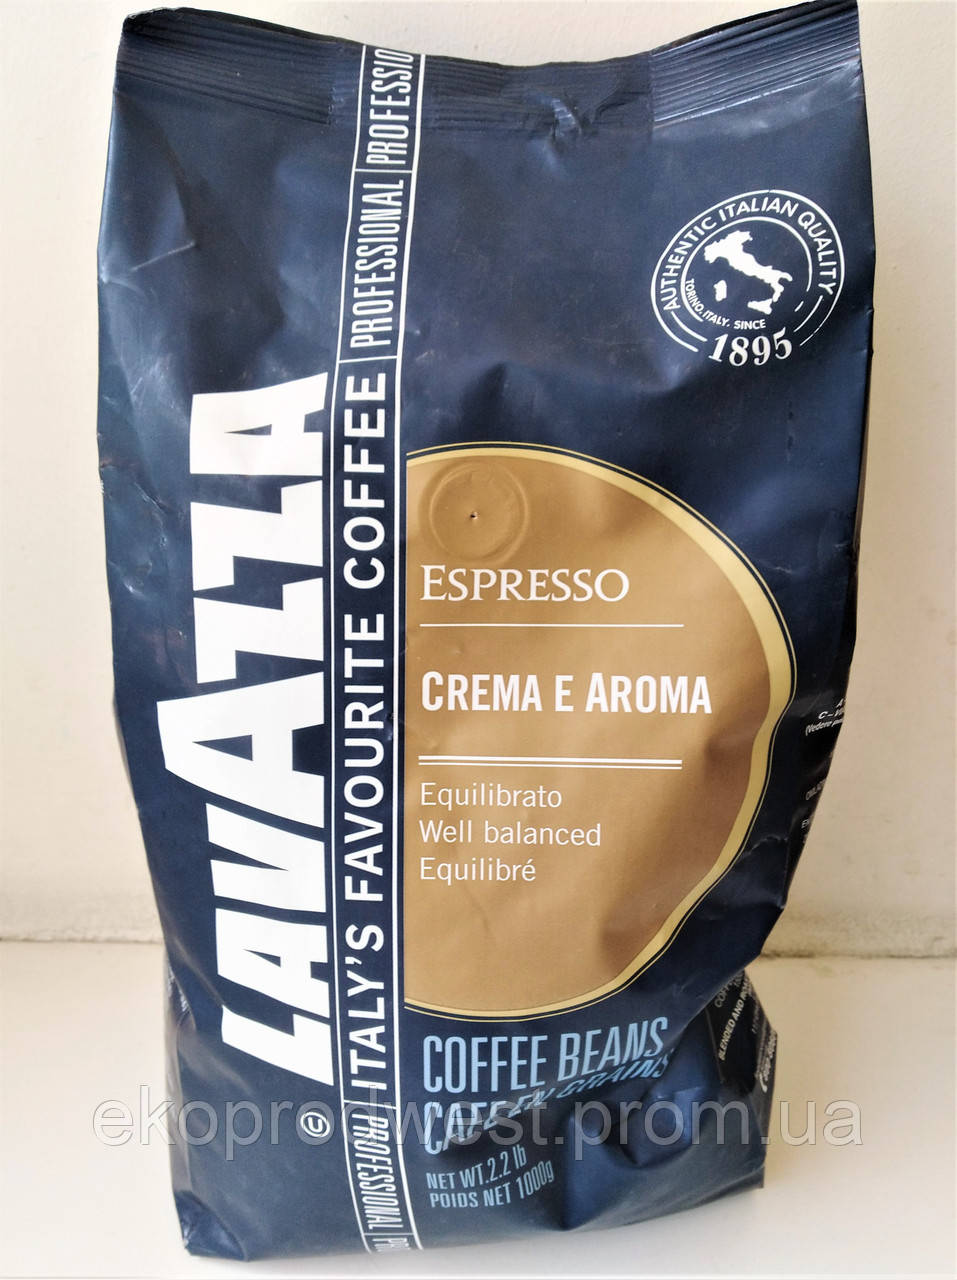 Кофе в зернах  Lavazza Espresso Crema E Aroma ( эспрессо )  1 кг.